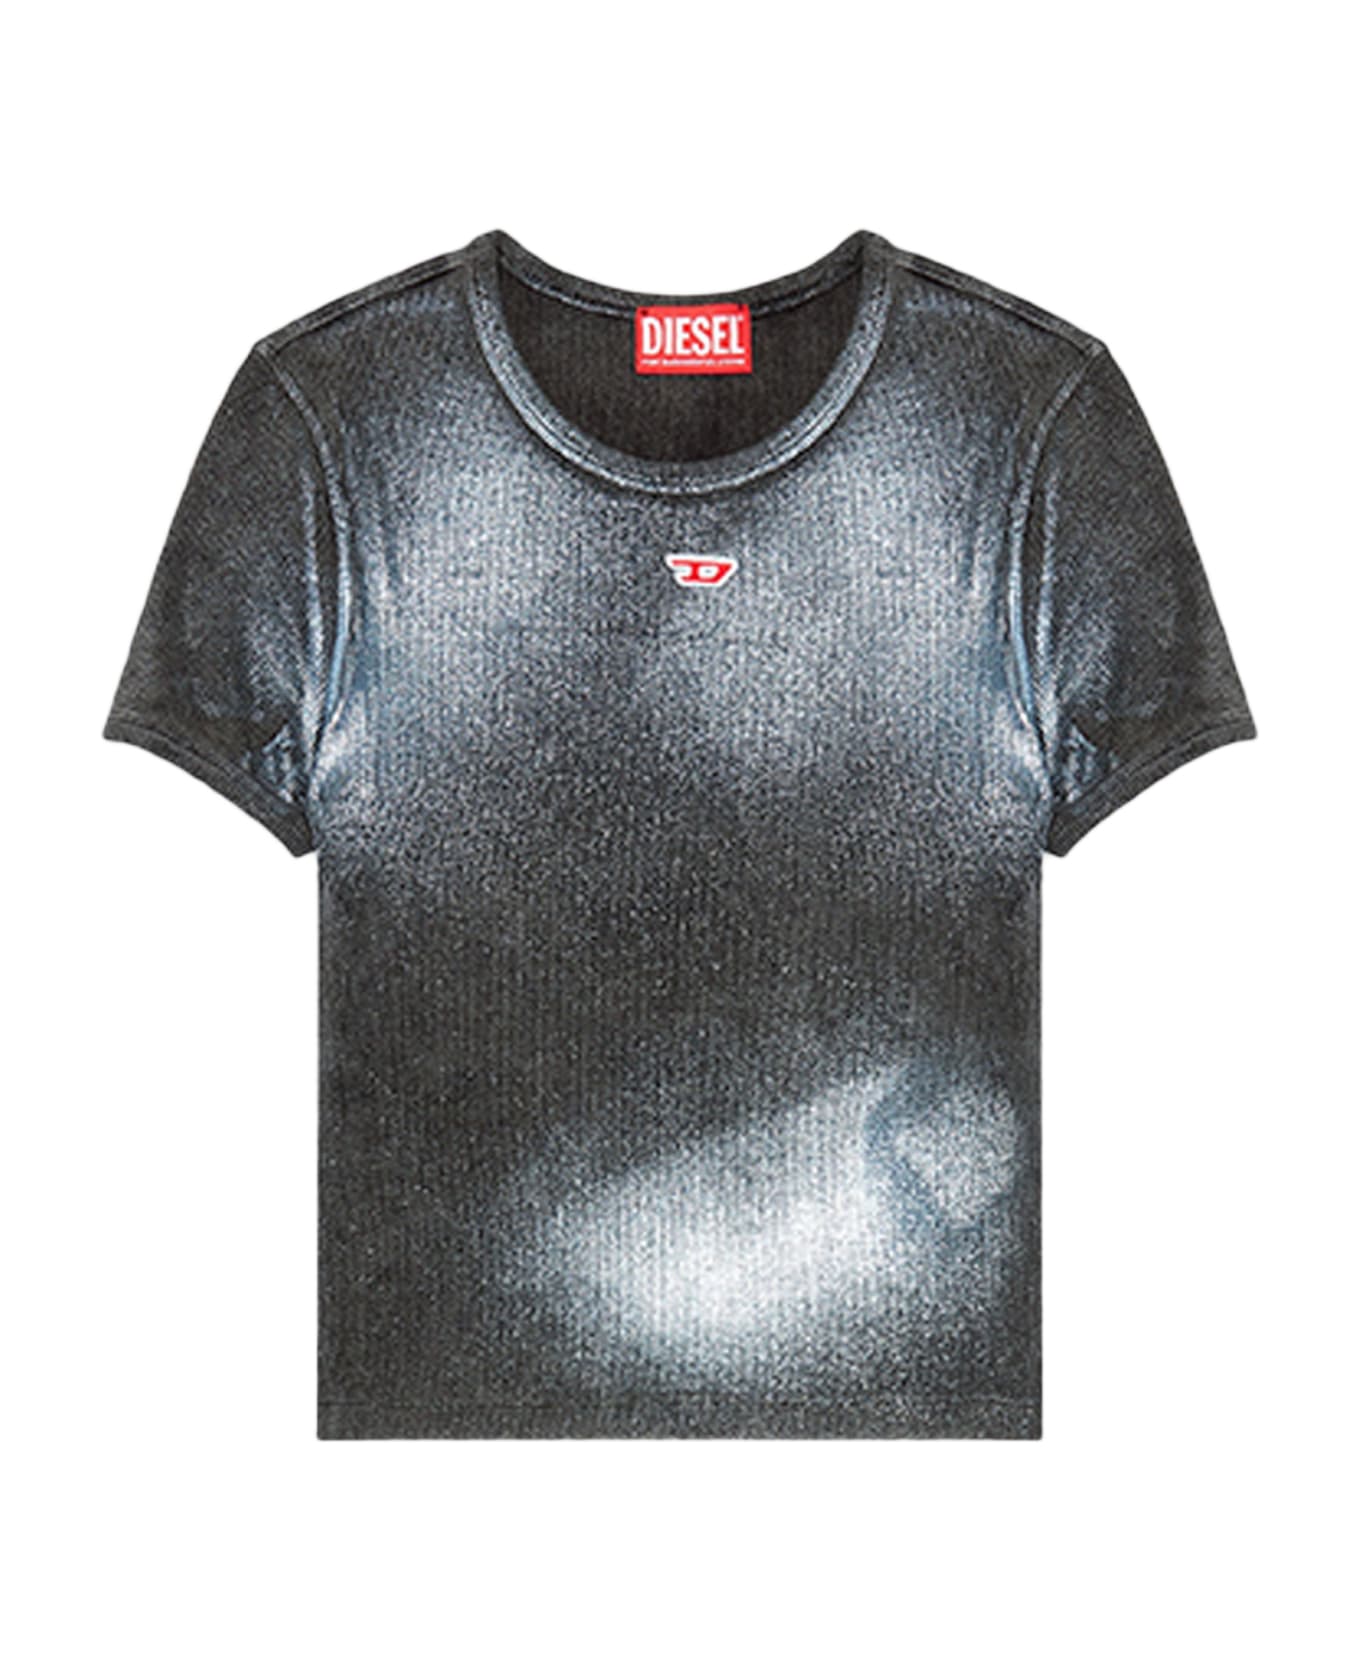 Diesel T-ele-n1 Black ribbed cotton t-shirt with metallic coating - T Ele N1 - Nero